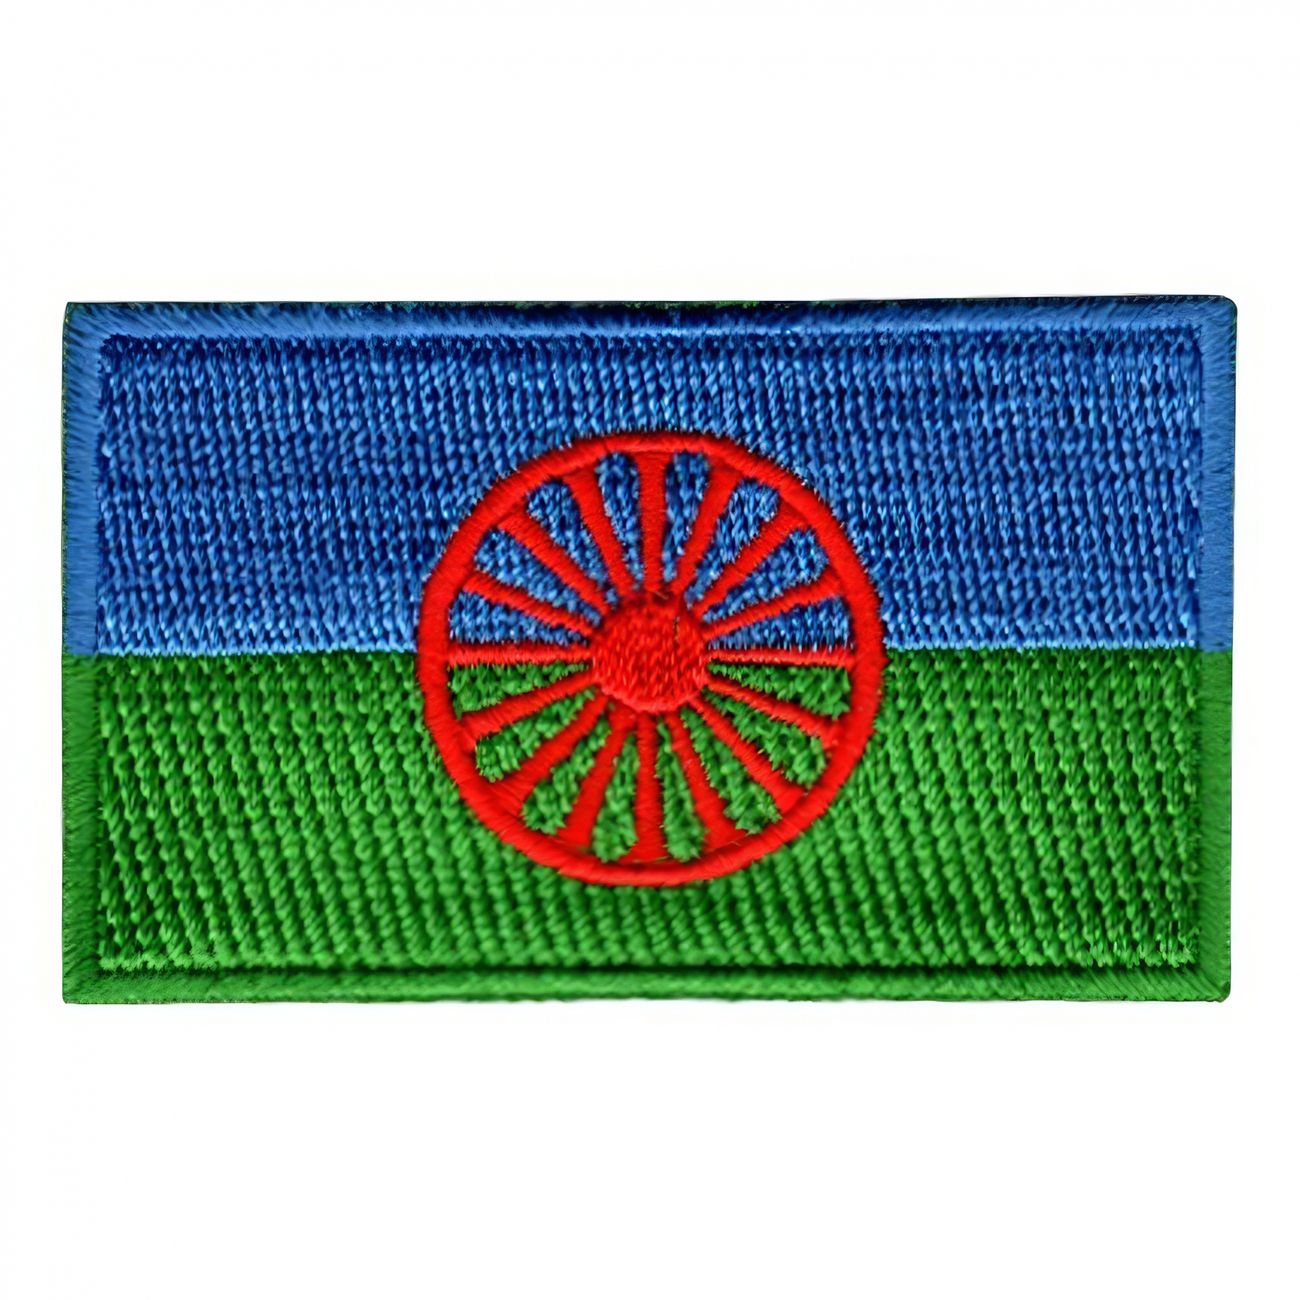 tygmarke-romska-flaggan-94599-1